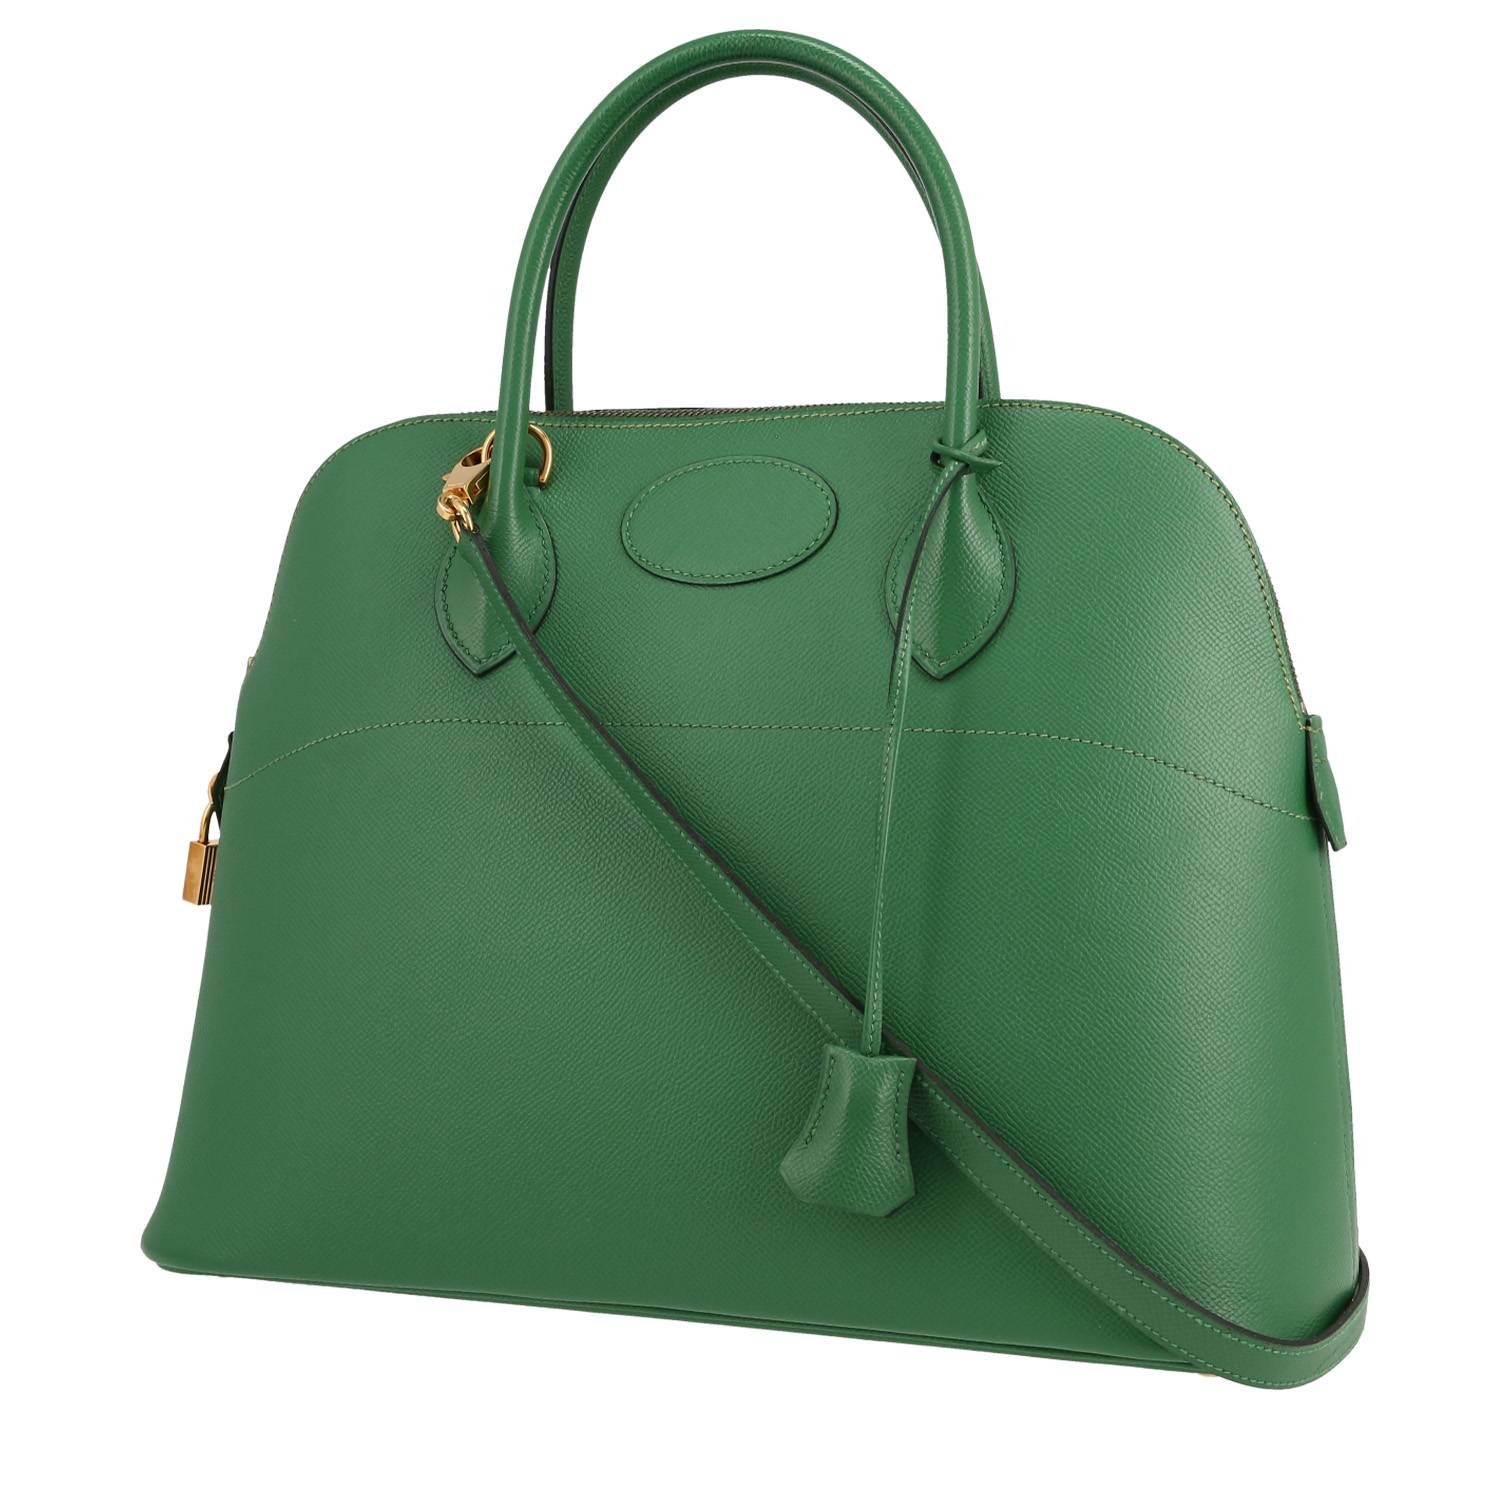 Bolide 35 cm Handbag In Courchevel Leather